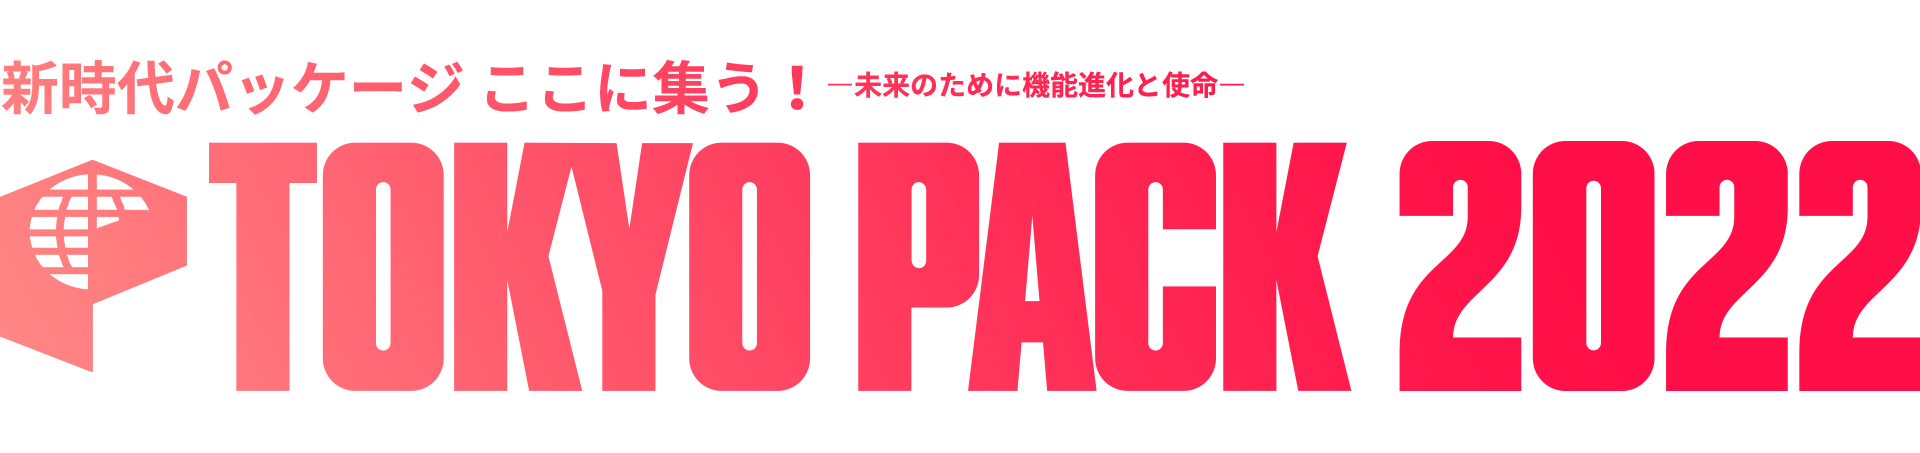 TOKYO PACK 2022